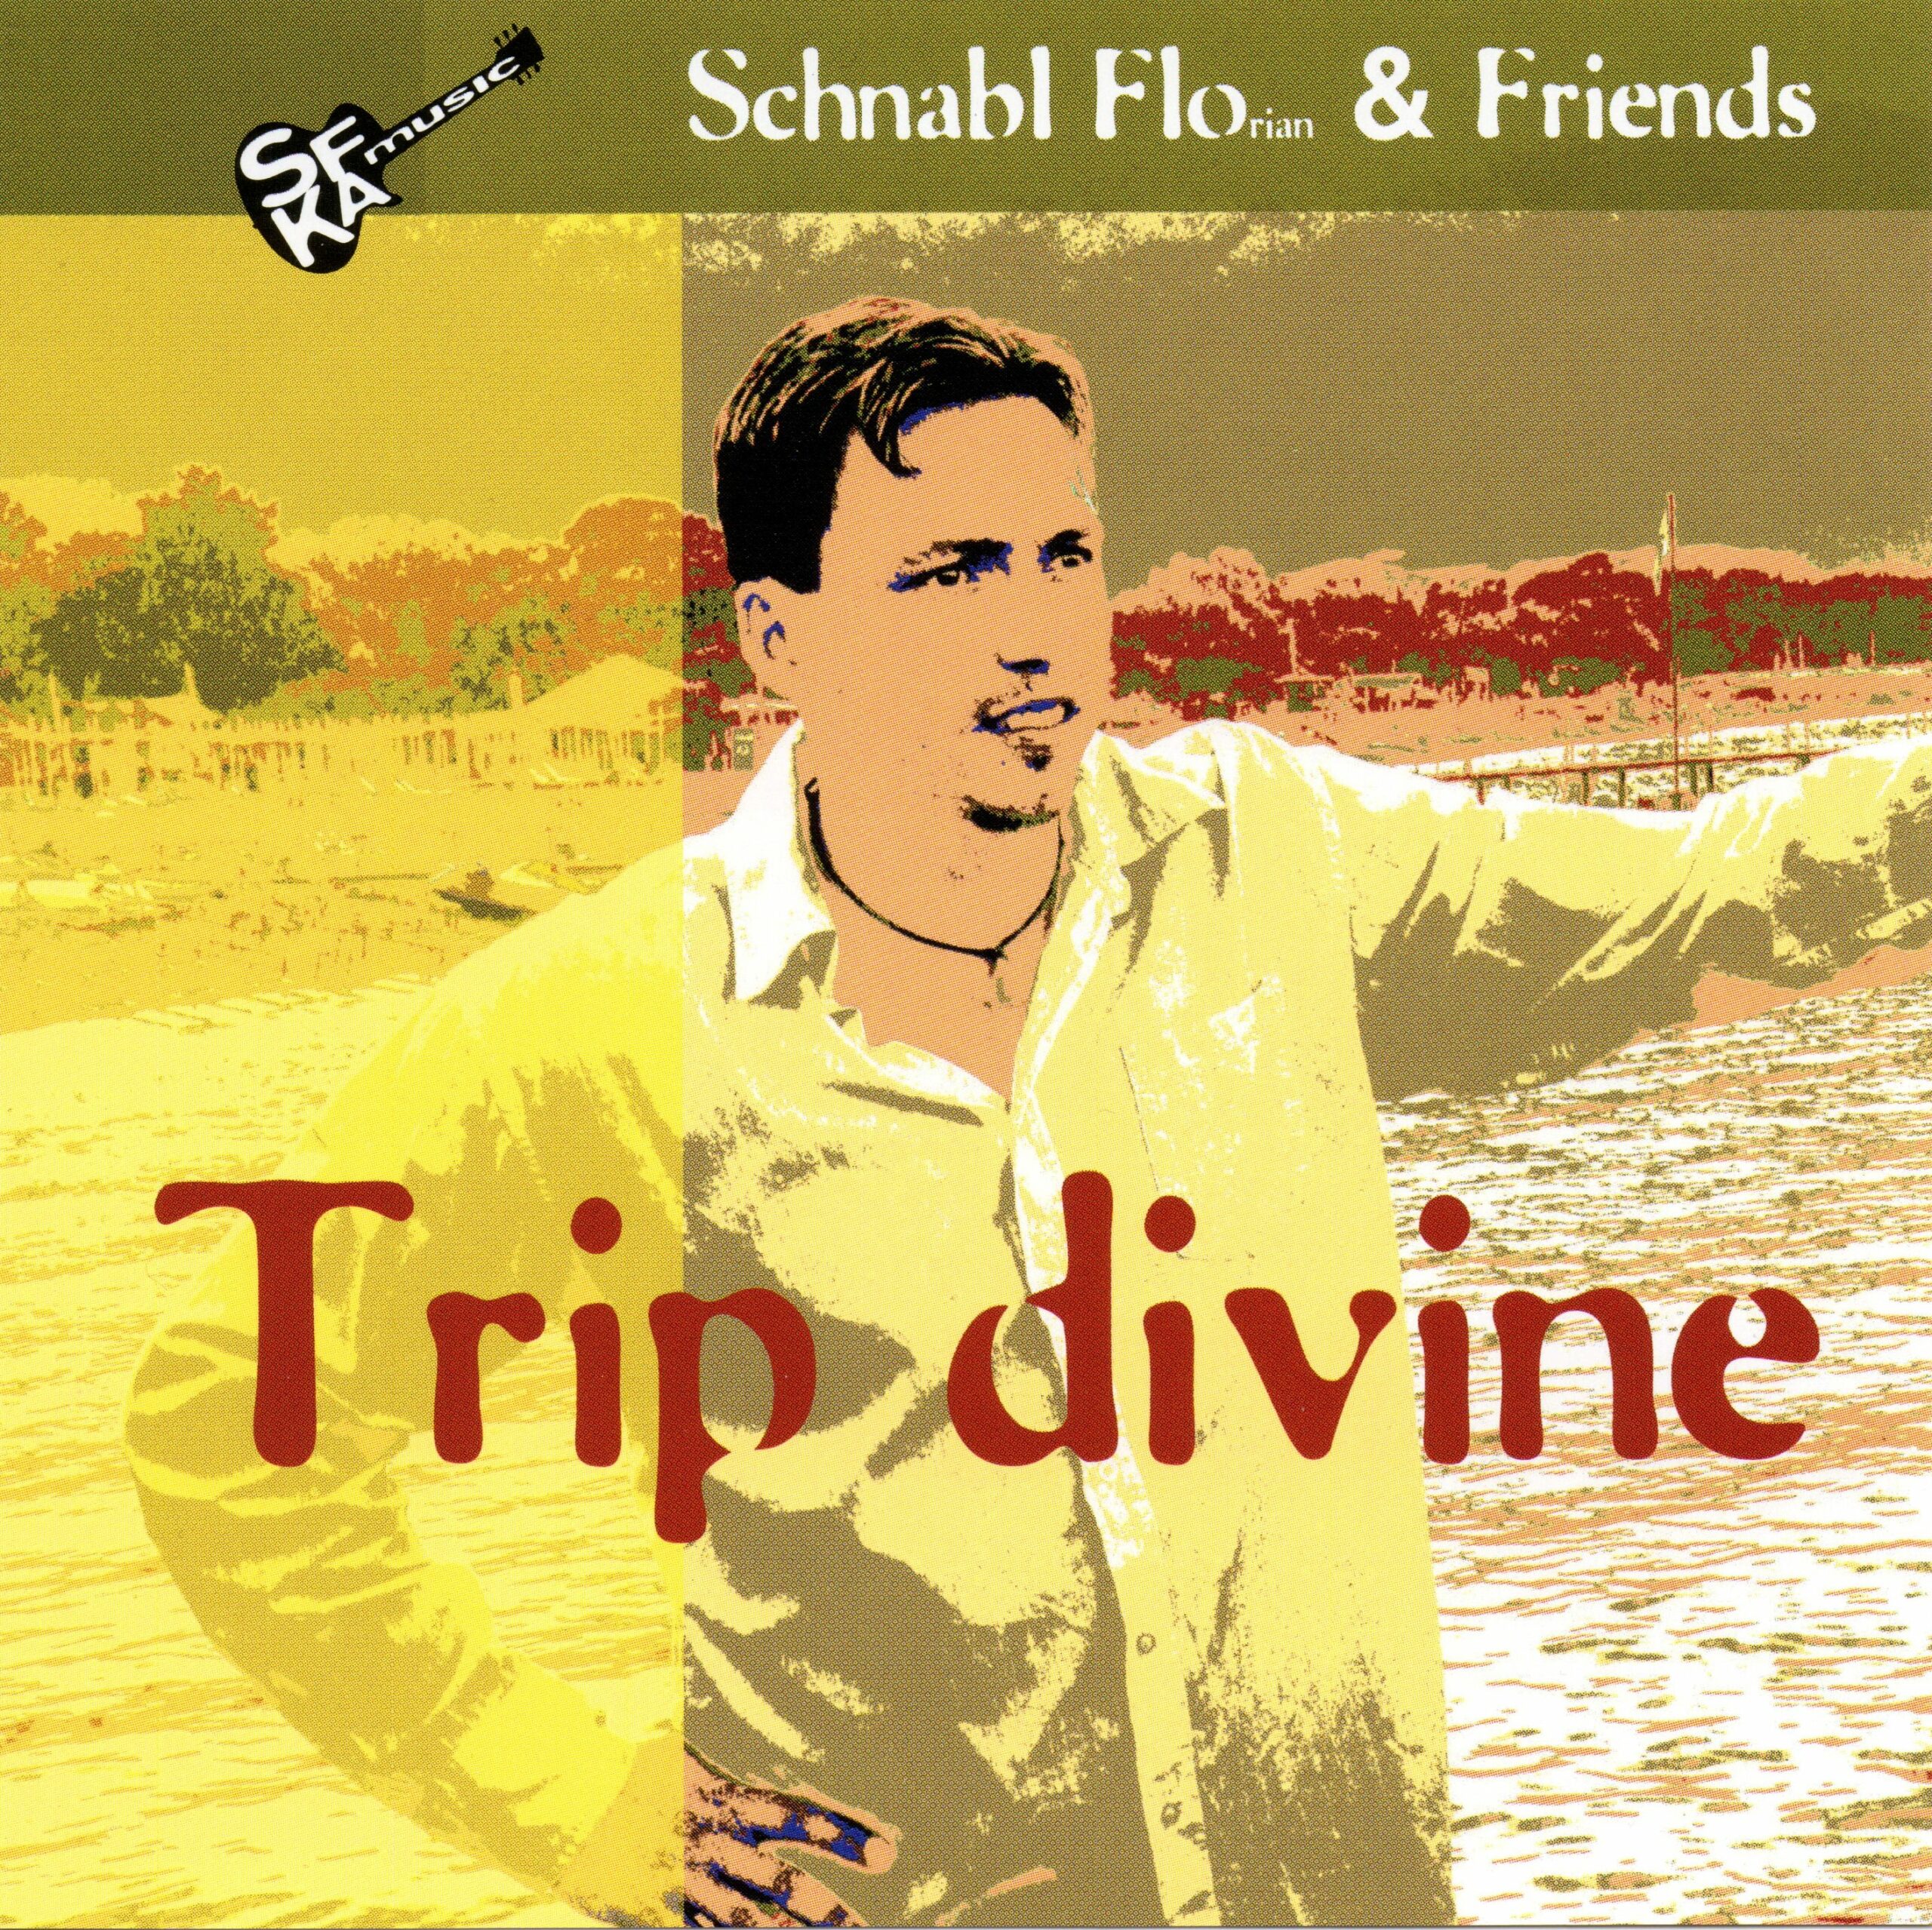 Schnabl Florian & Friends – “Trip Divine” (2013)